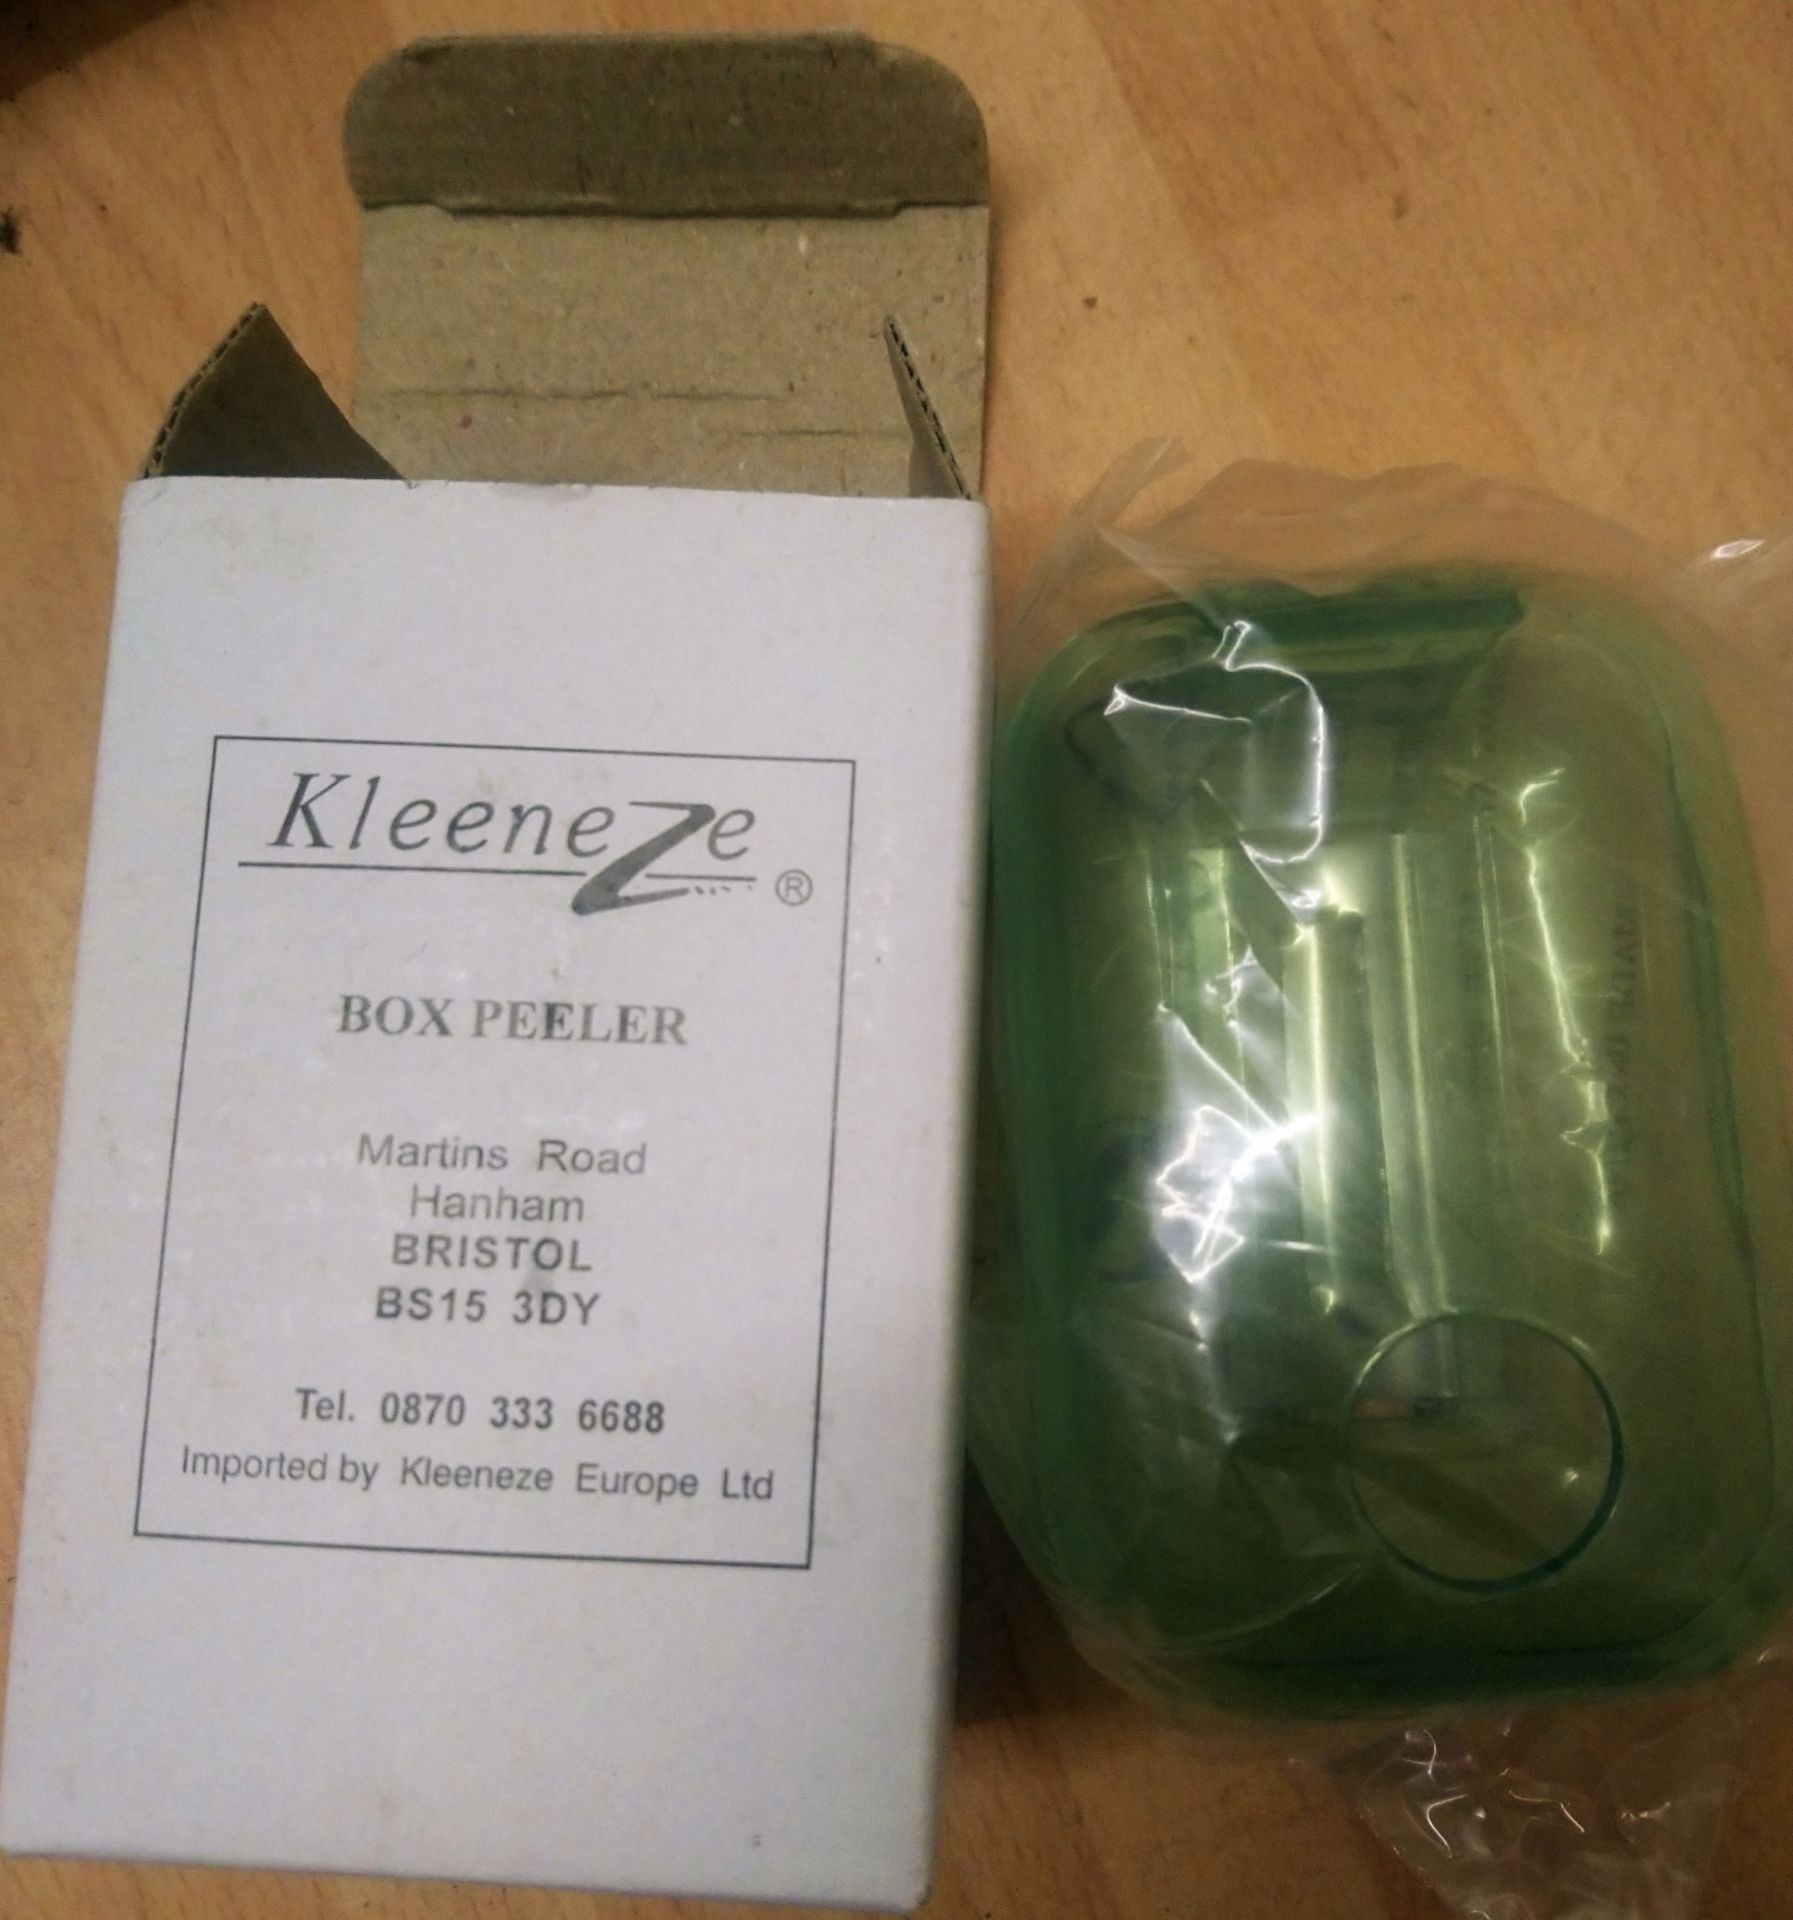 Kleeneze products - Image 2 of 6